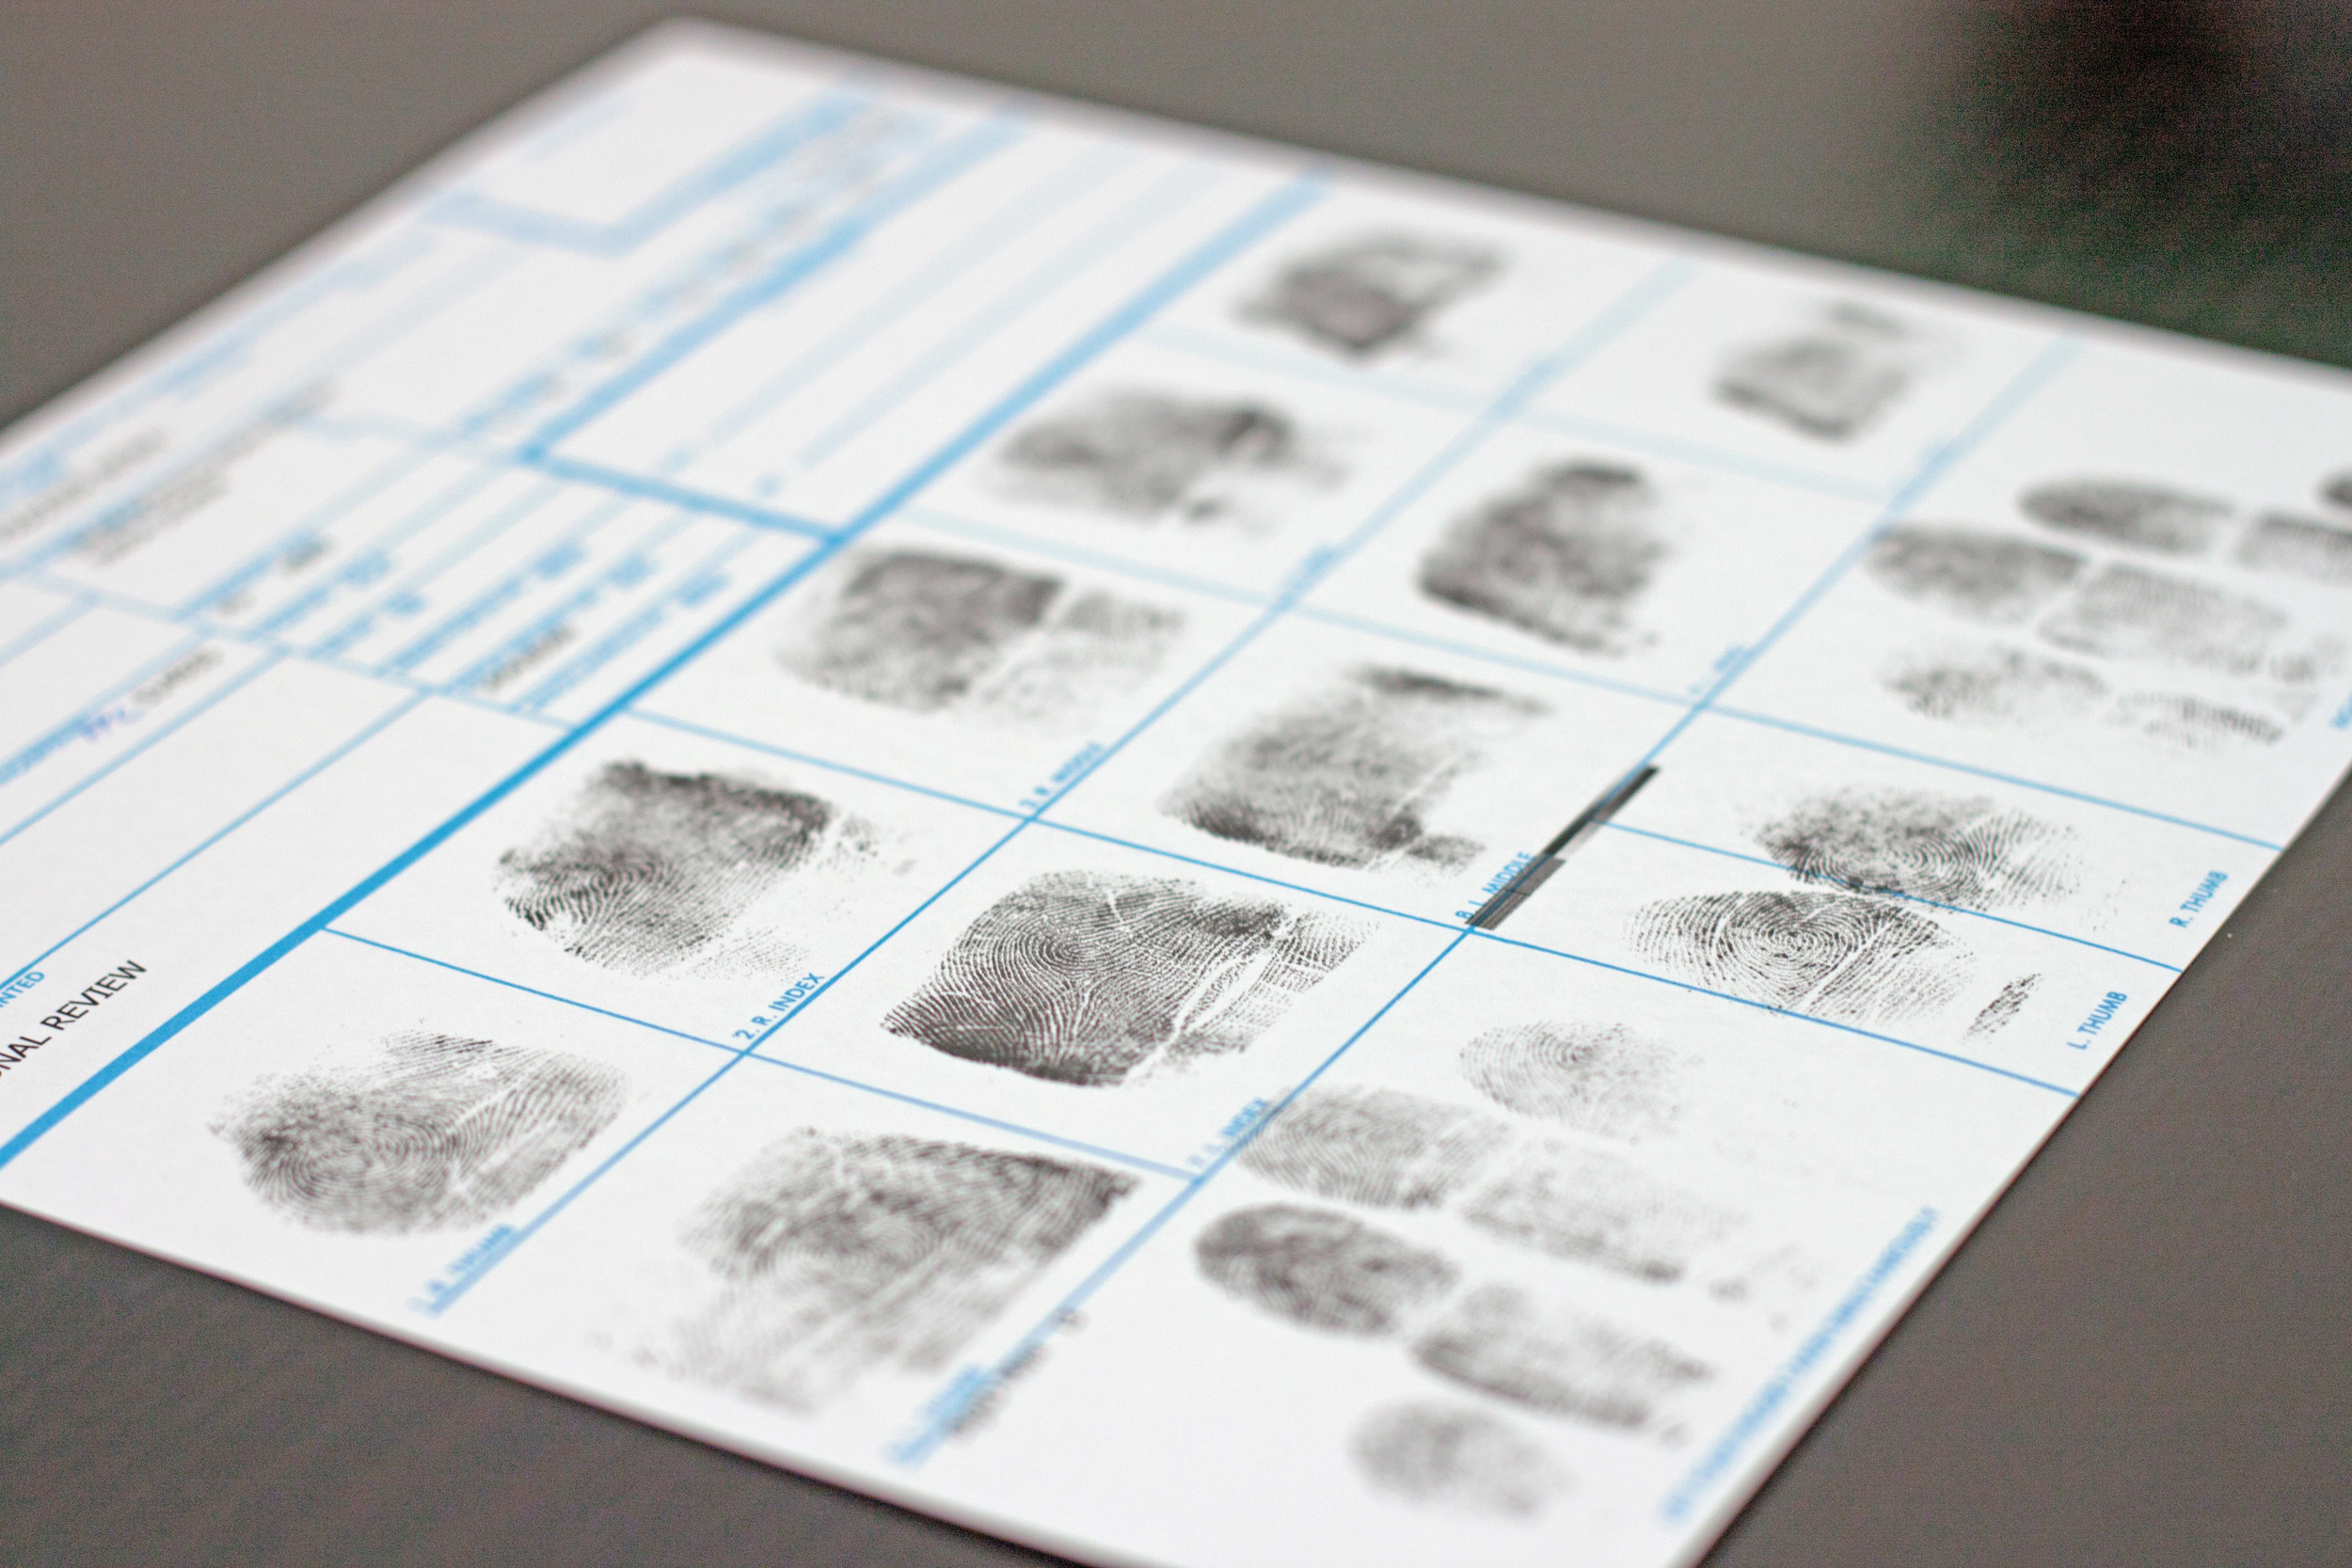 Inked Fingerprints FNL FINGERPRINTS NOTARY PUBLIC PASSPORT PHOTOS